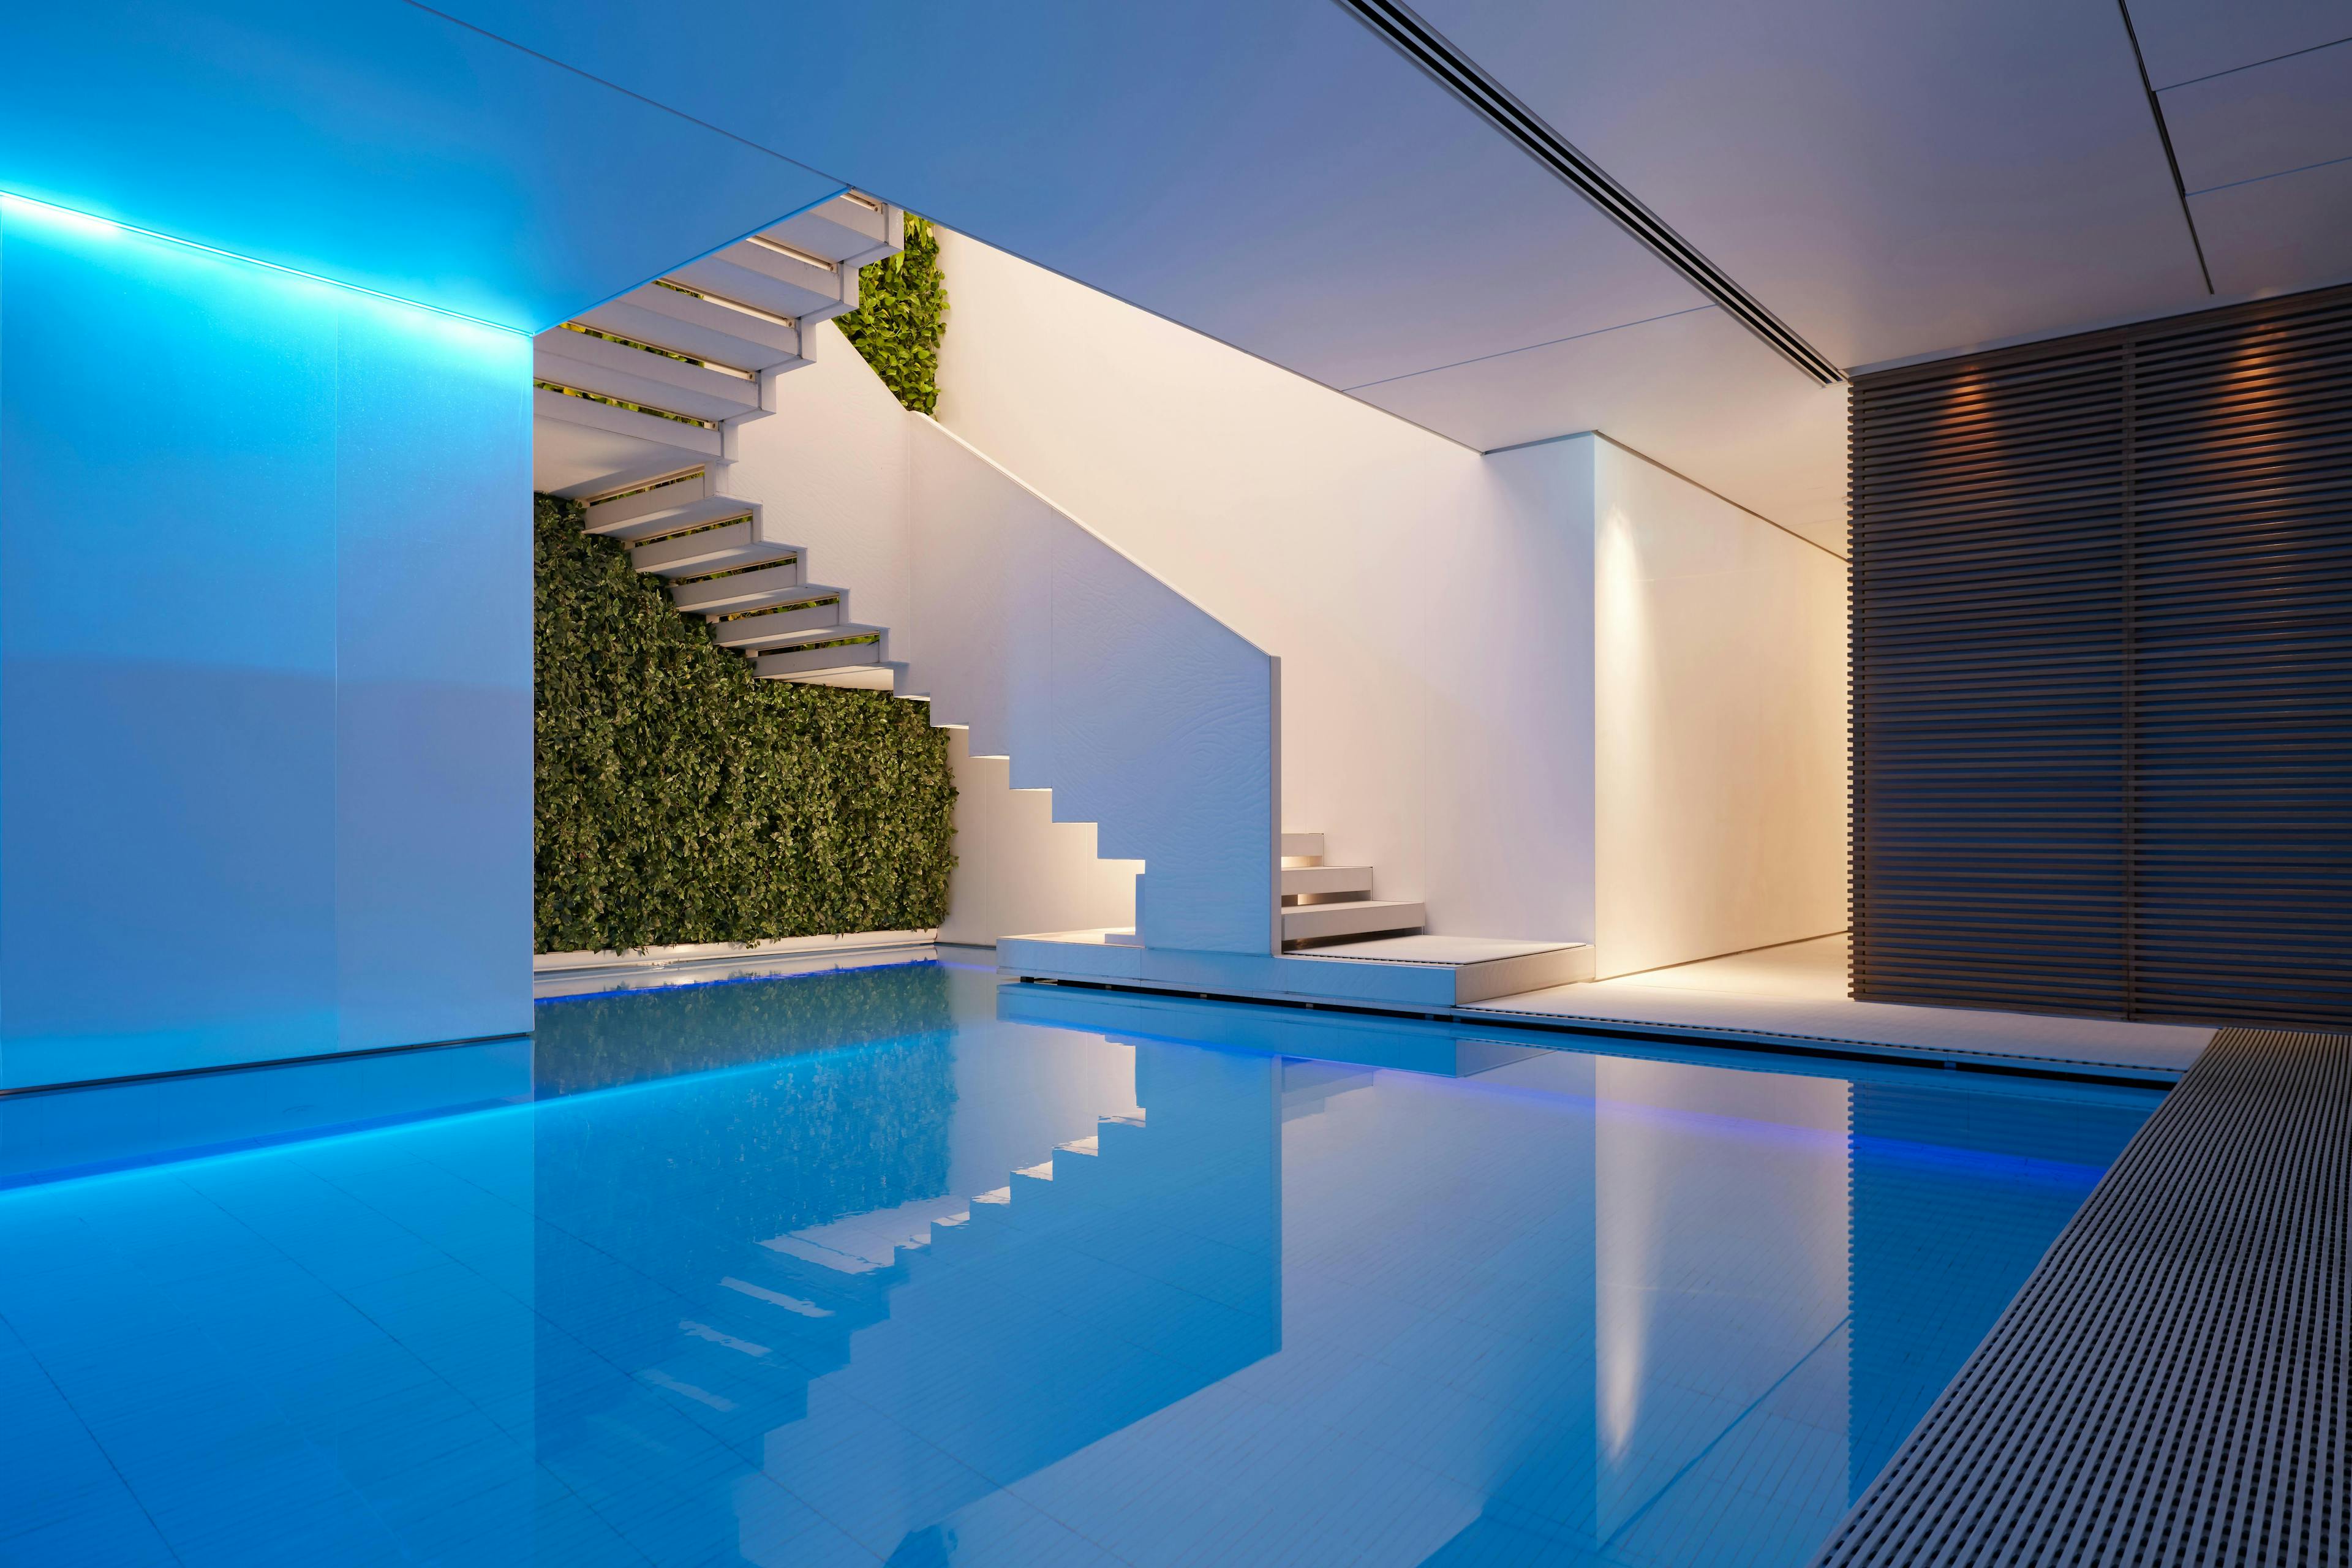 handrail banister pool water swimming pool